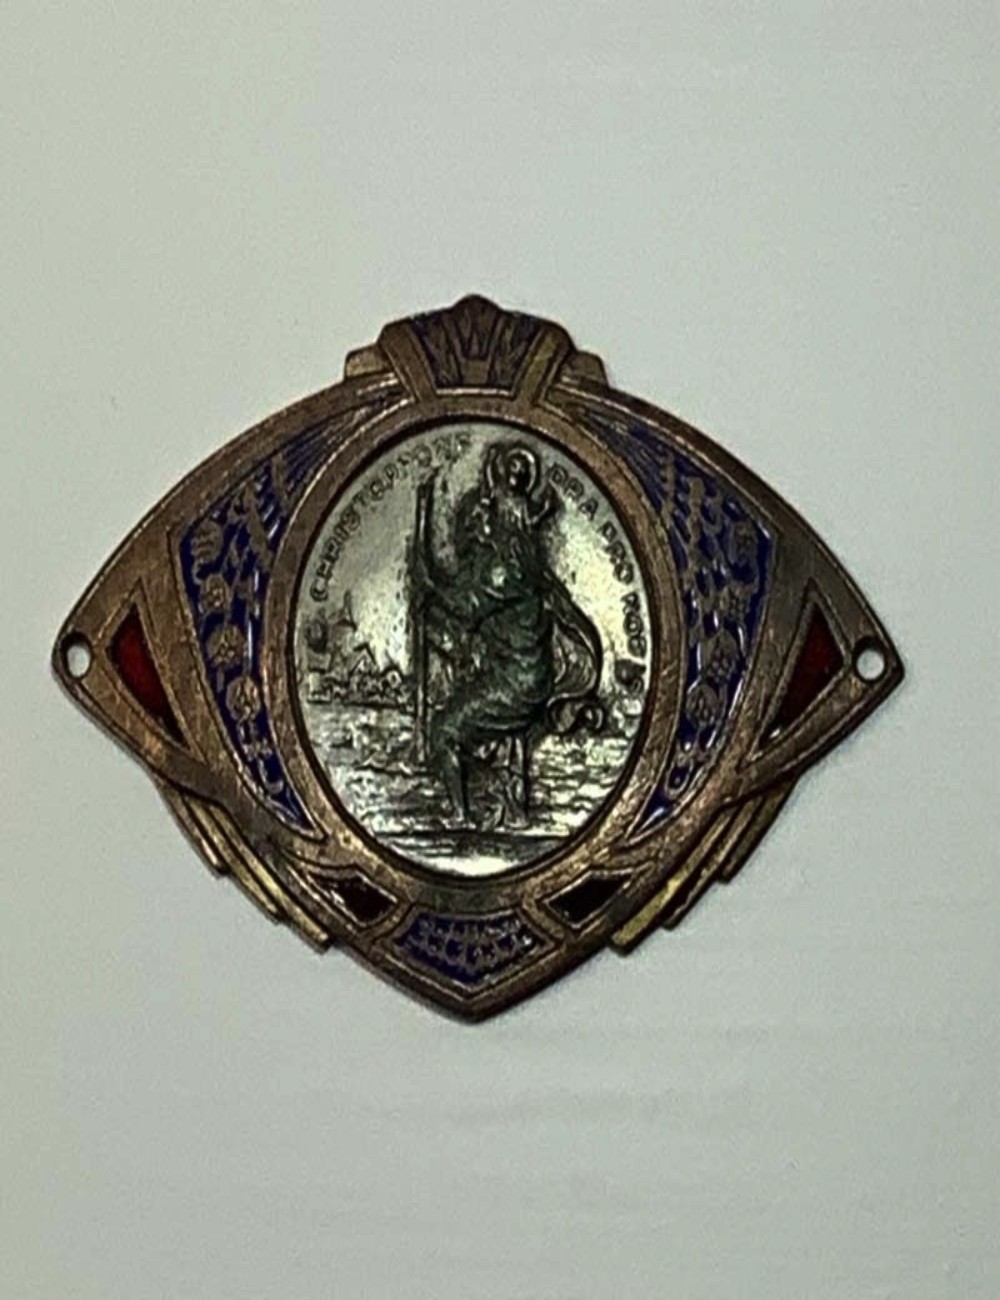 San Cristoforo plaque. Dimensions 5.9 cm x 4 cm